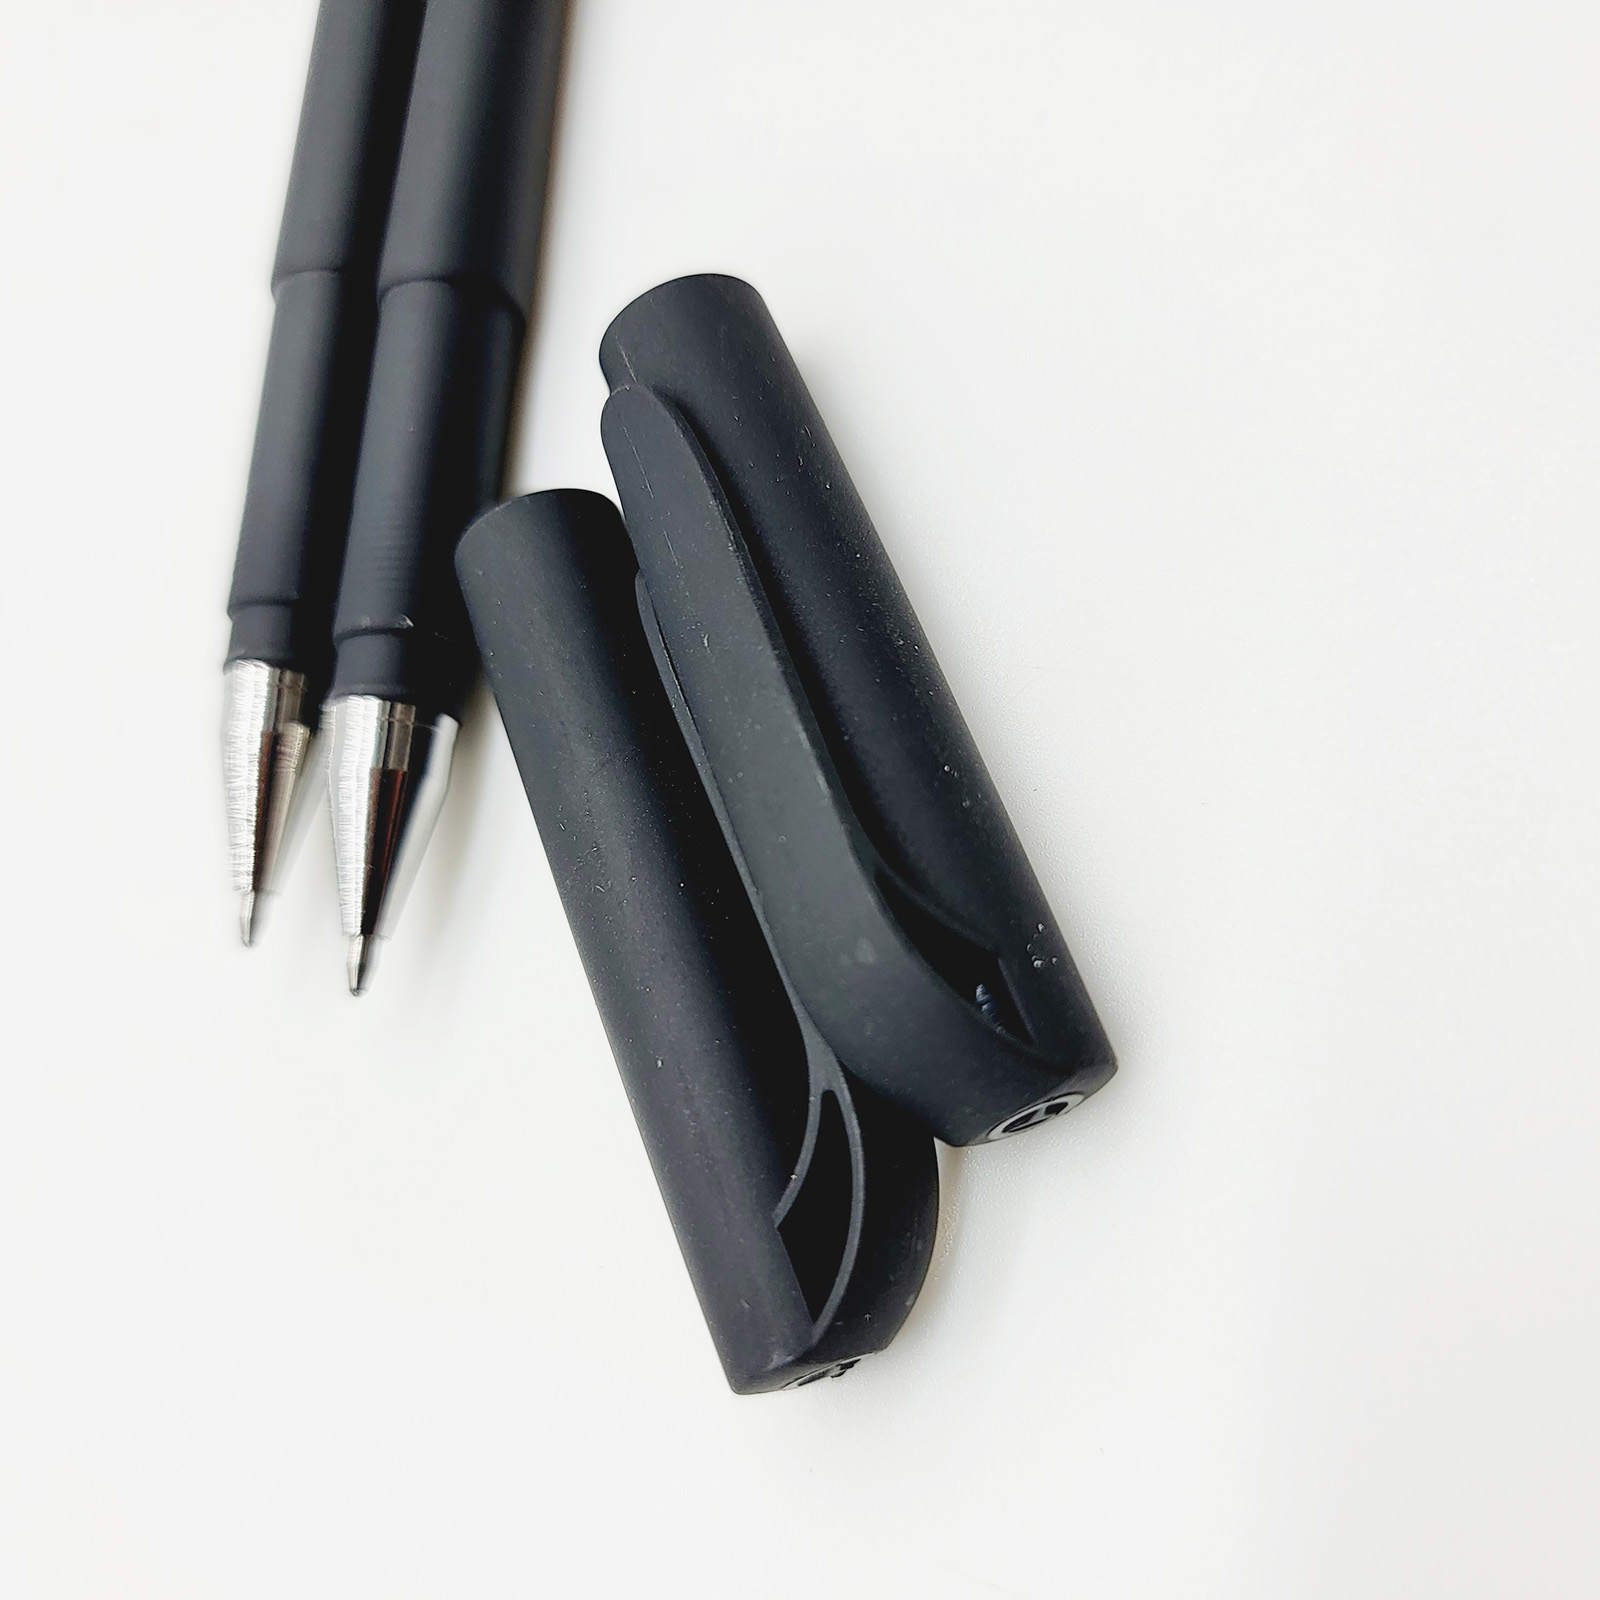 Heating Vanish Pen (Black) - Click Image to Close